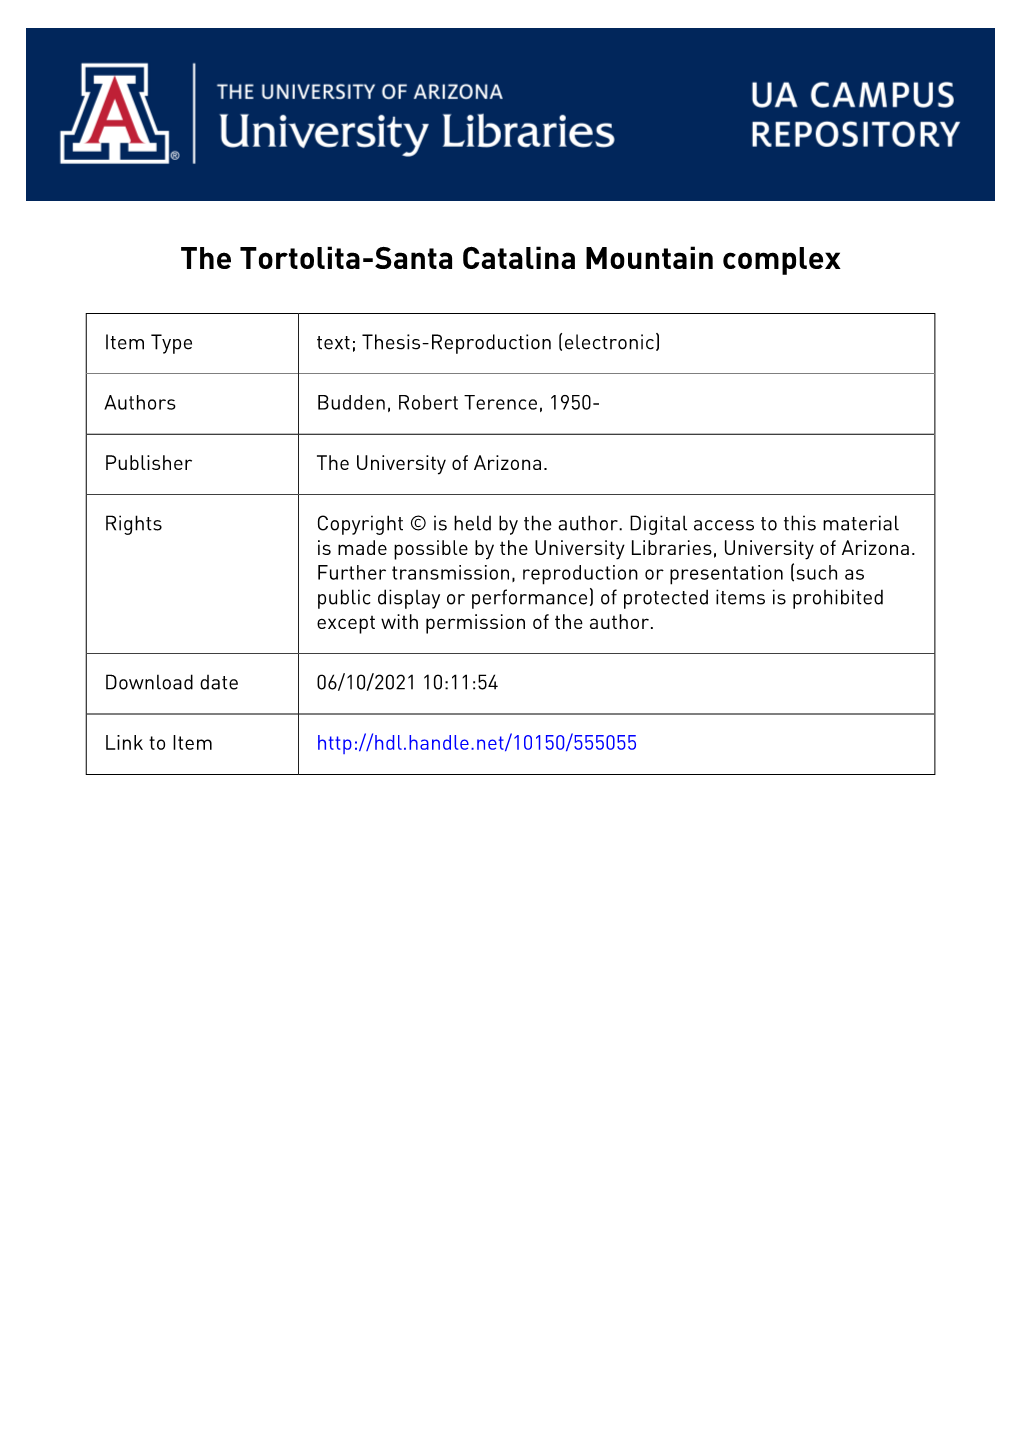 THE TORTOLITA-SANTA CATALINA MOUNTAIN COMPLEX Robert